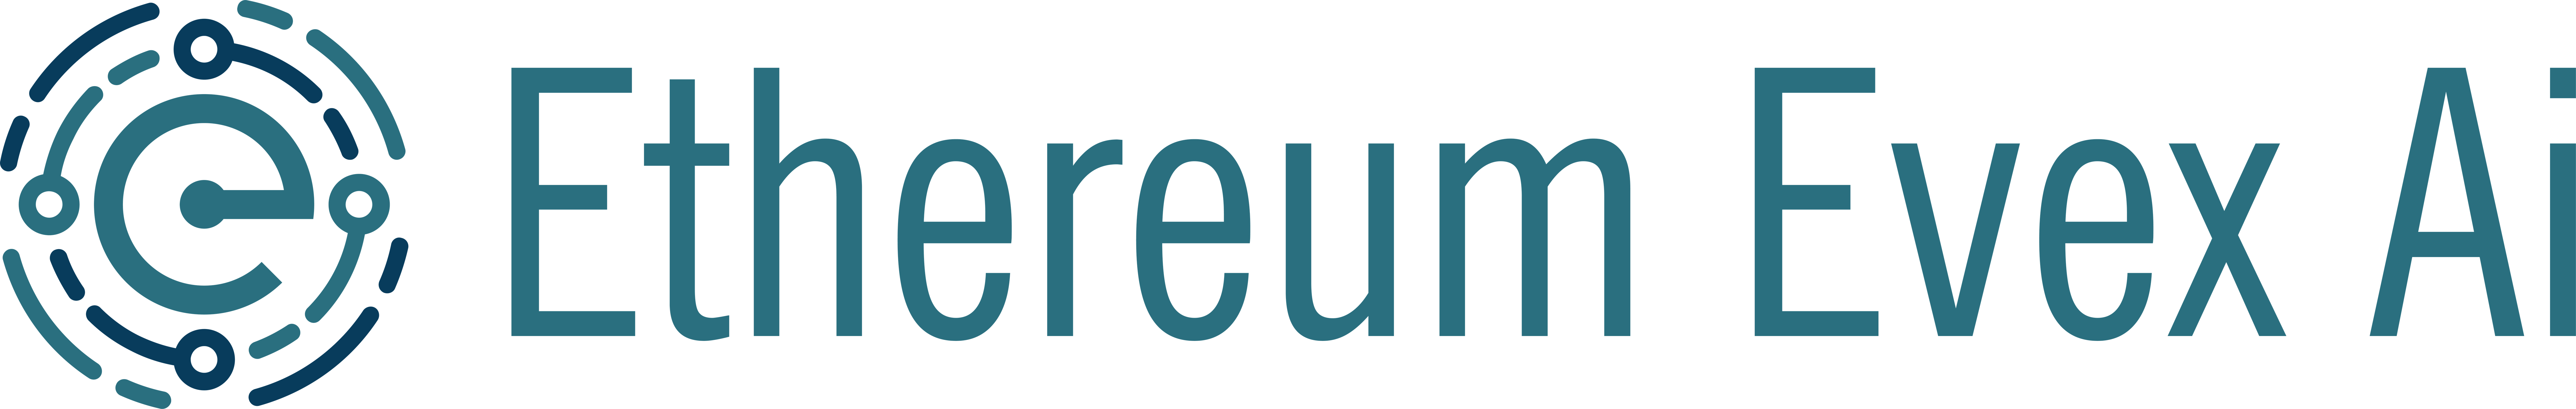 Ethereum Eprex Ai Review